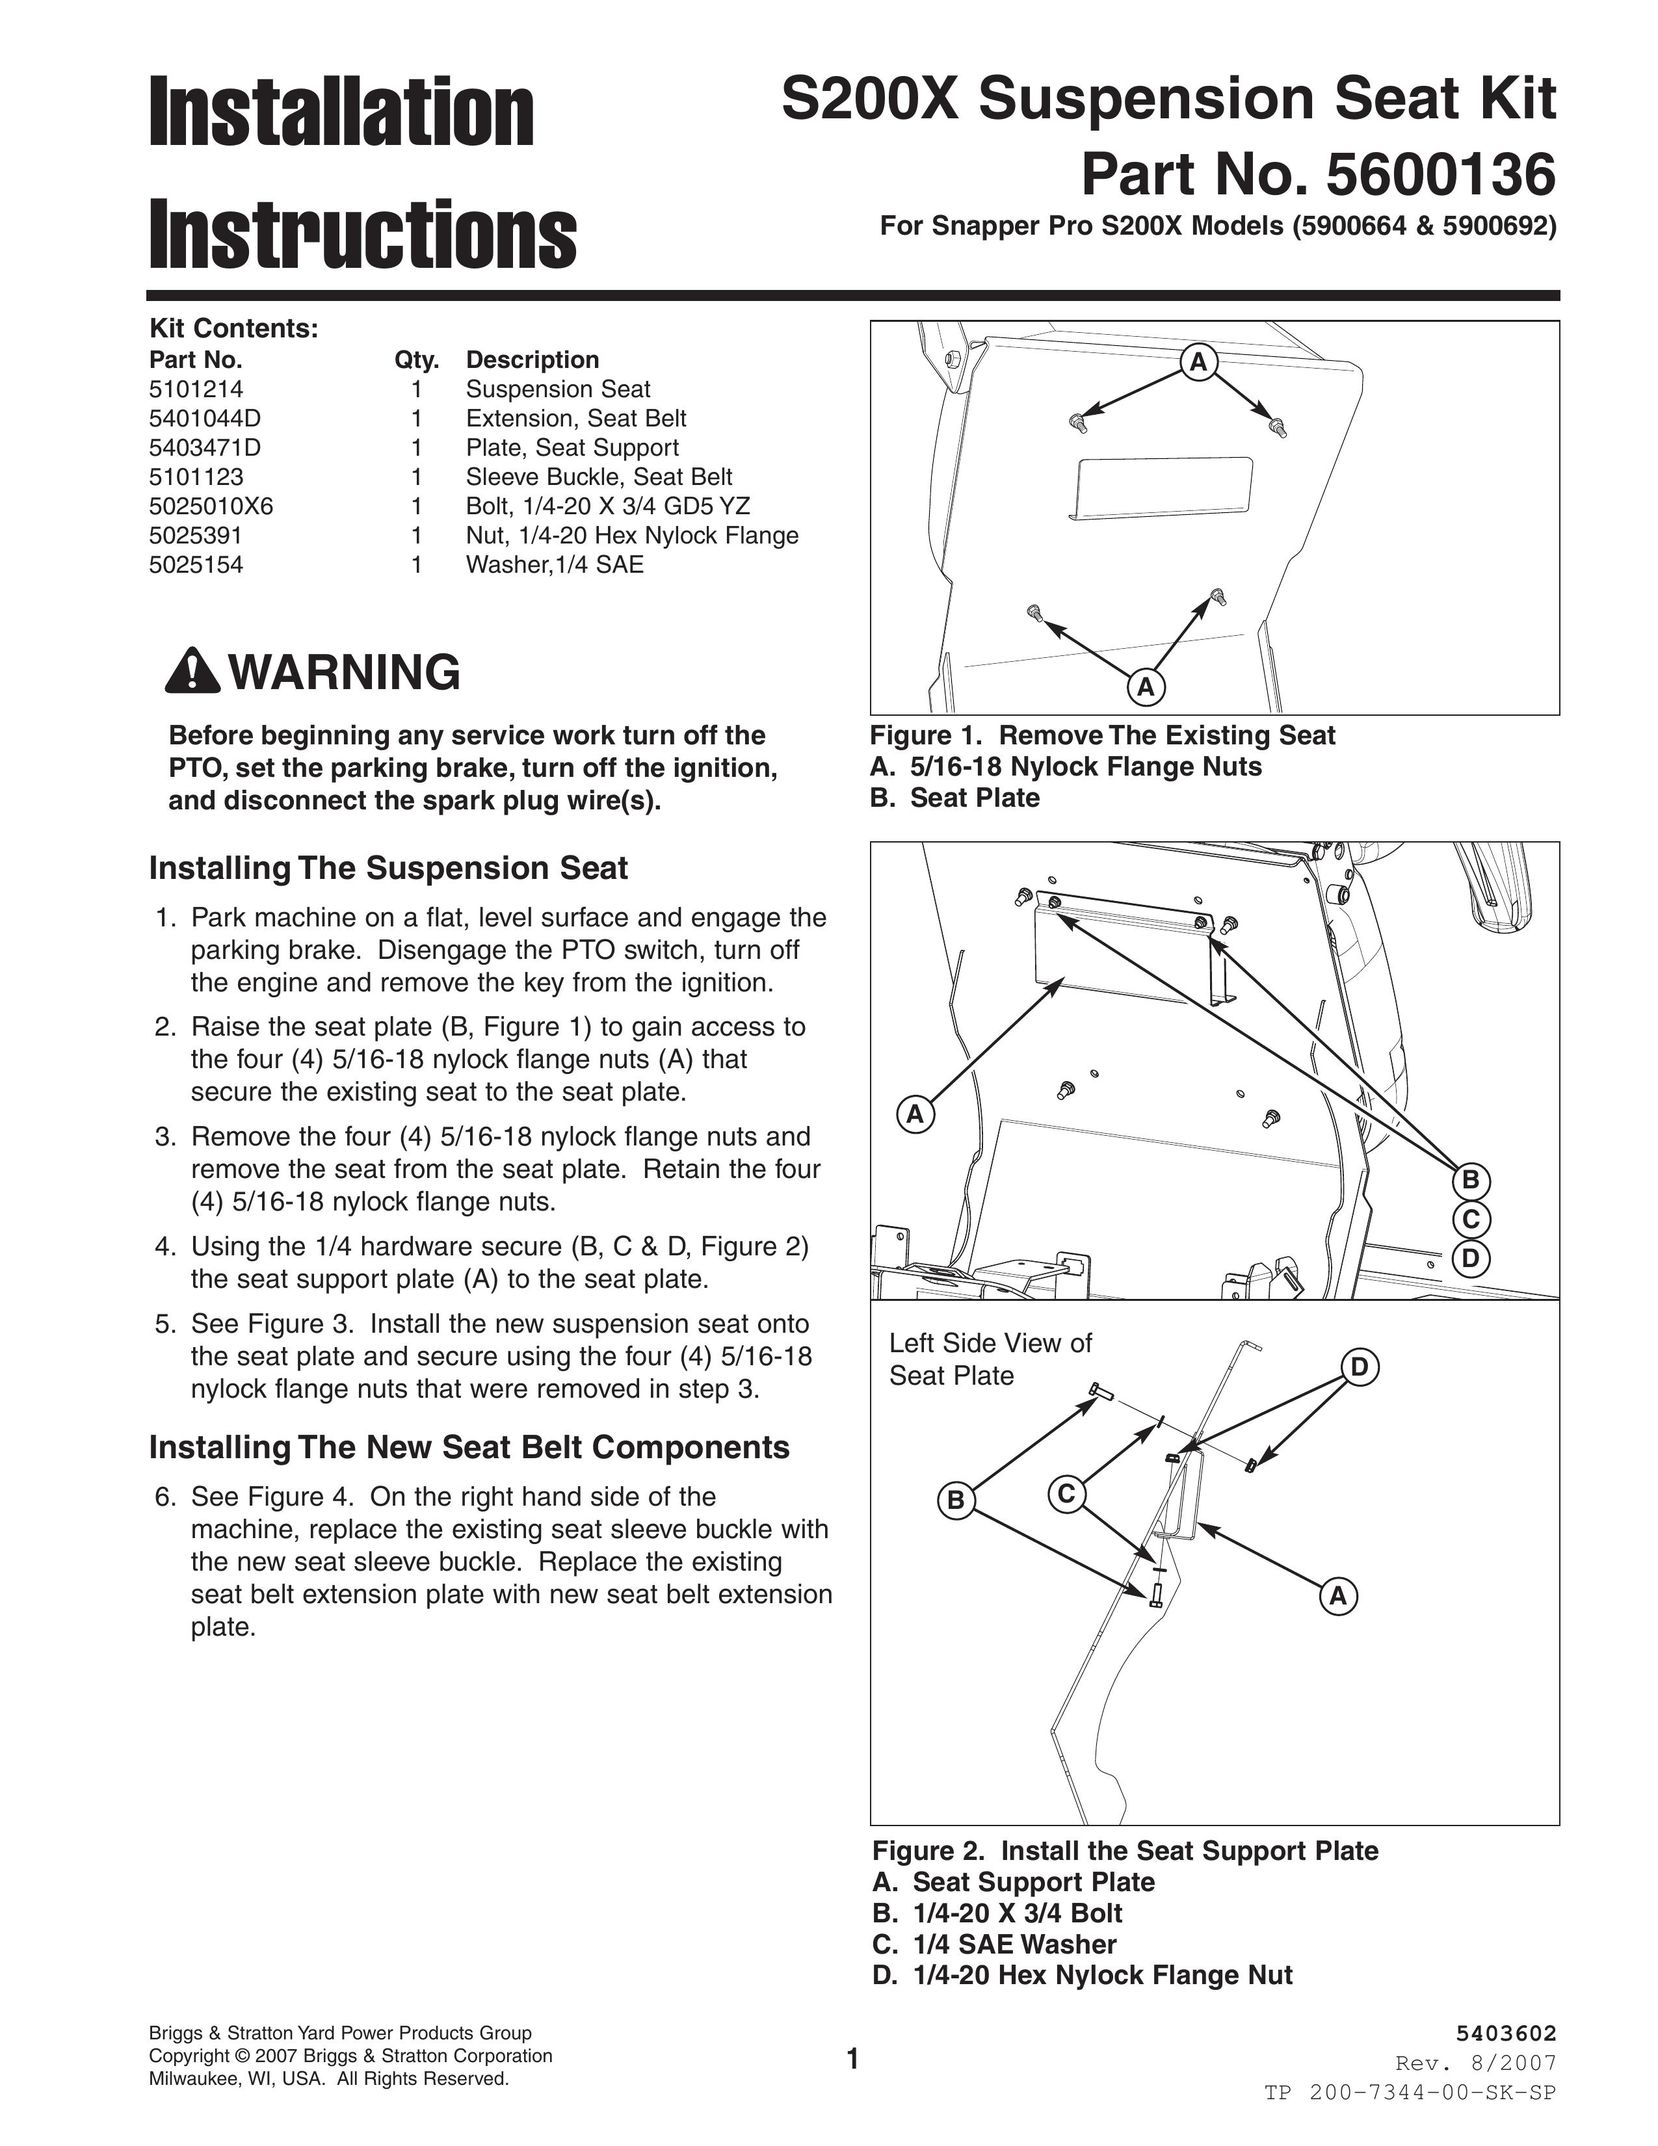 Briggs & Stratton S200X Car Seat User Manual